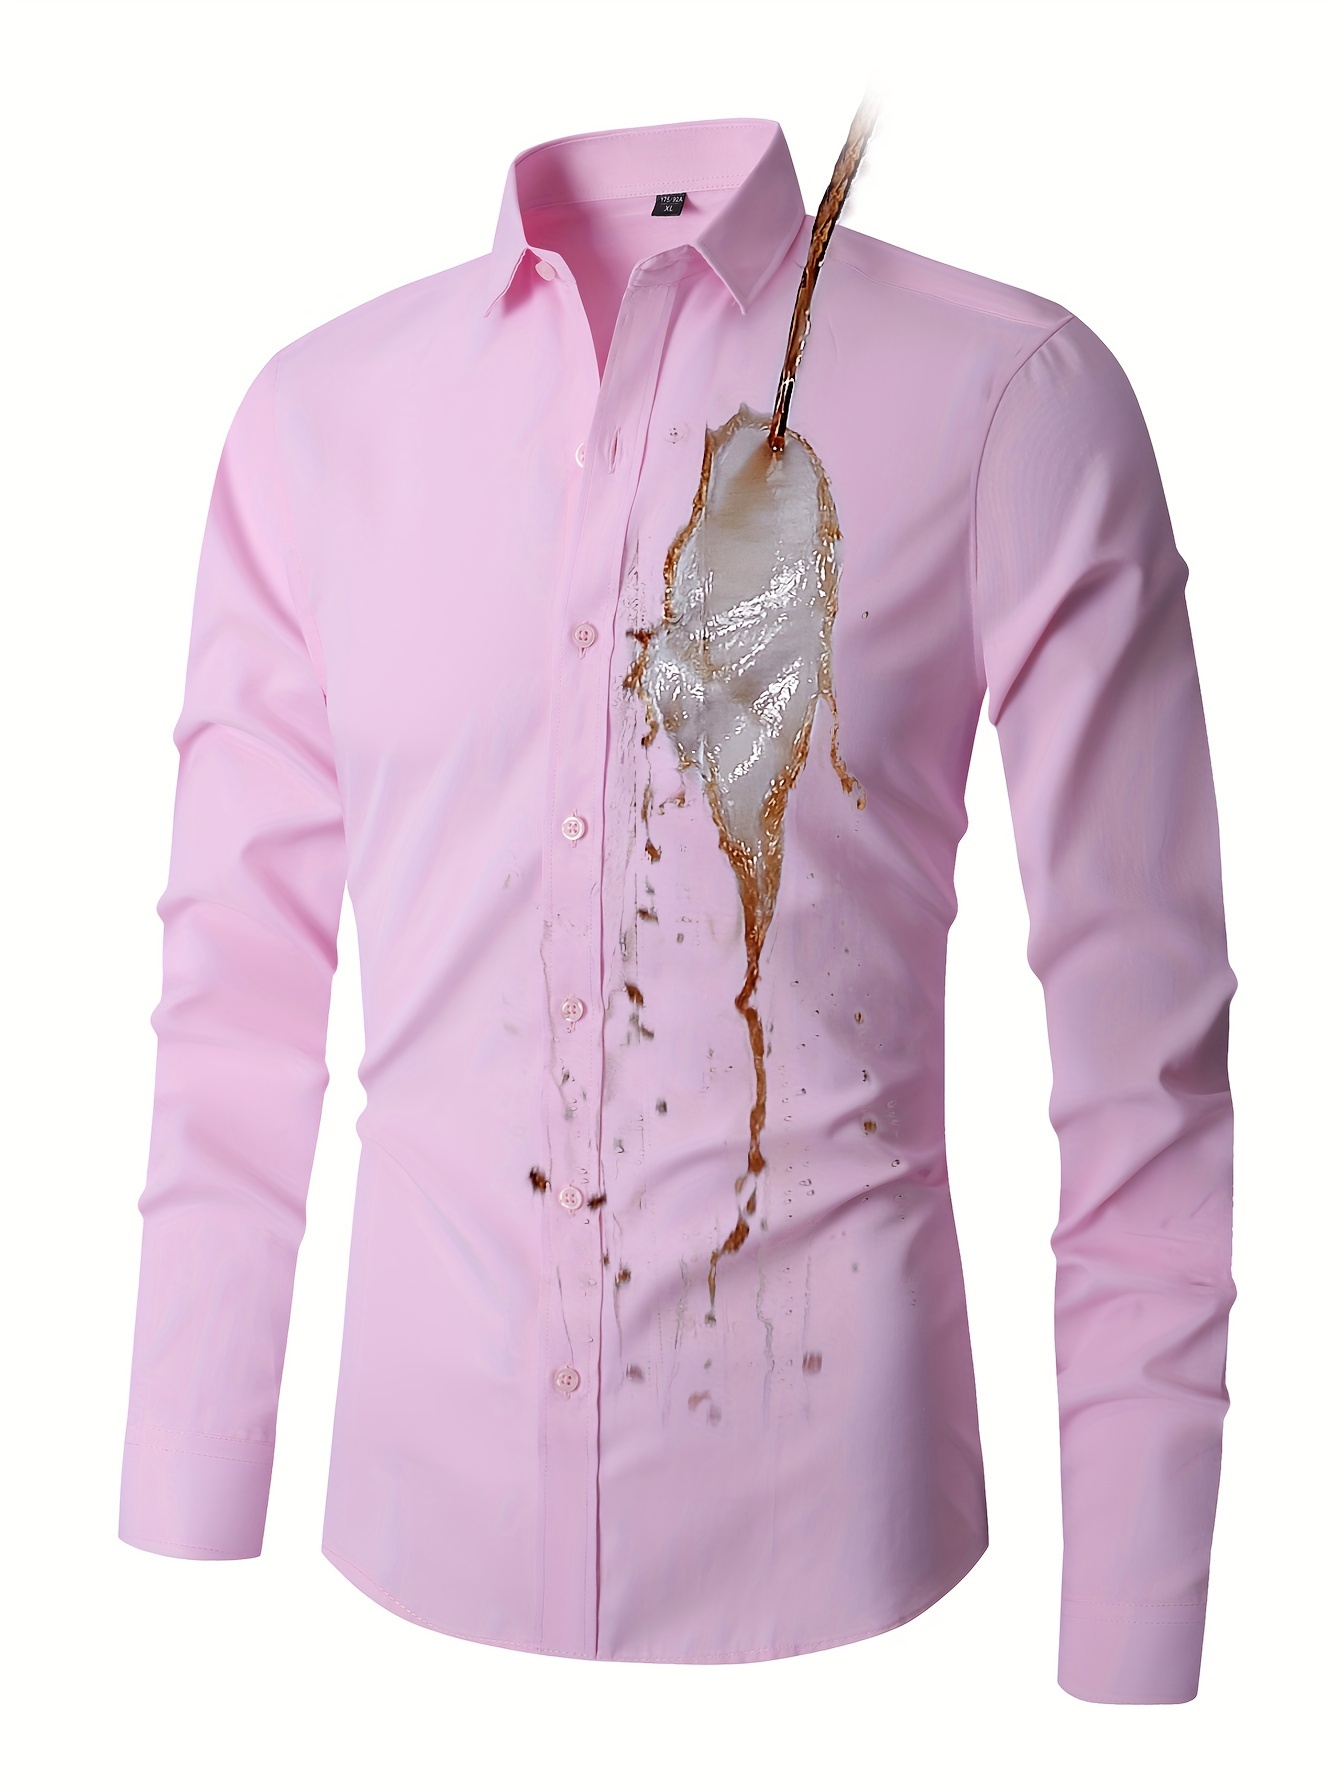 Camiseta Rosa Masculina Slim Lisa Básica Manga Curta Premium